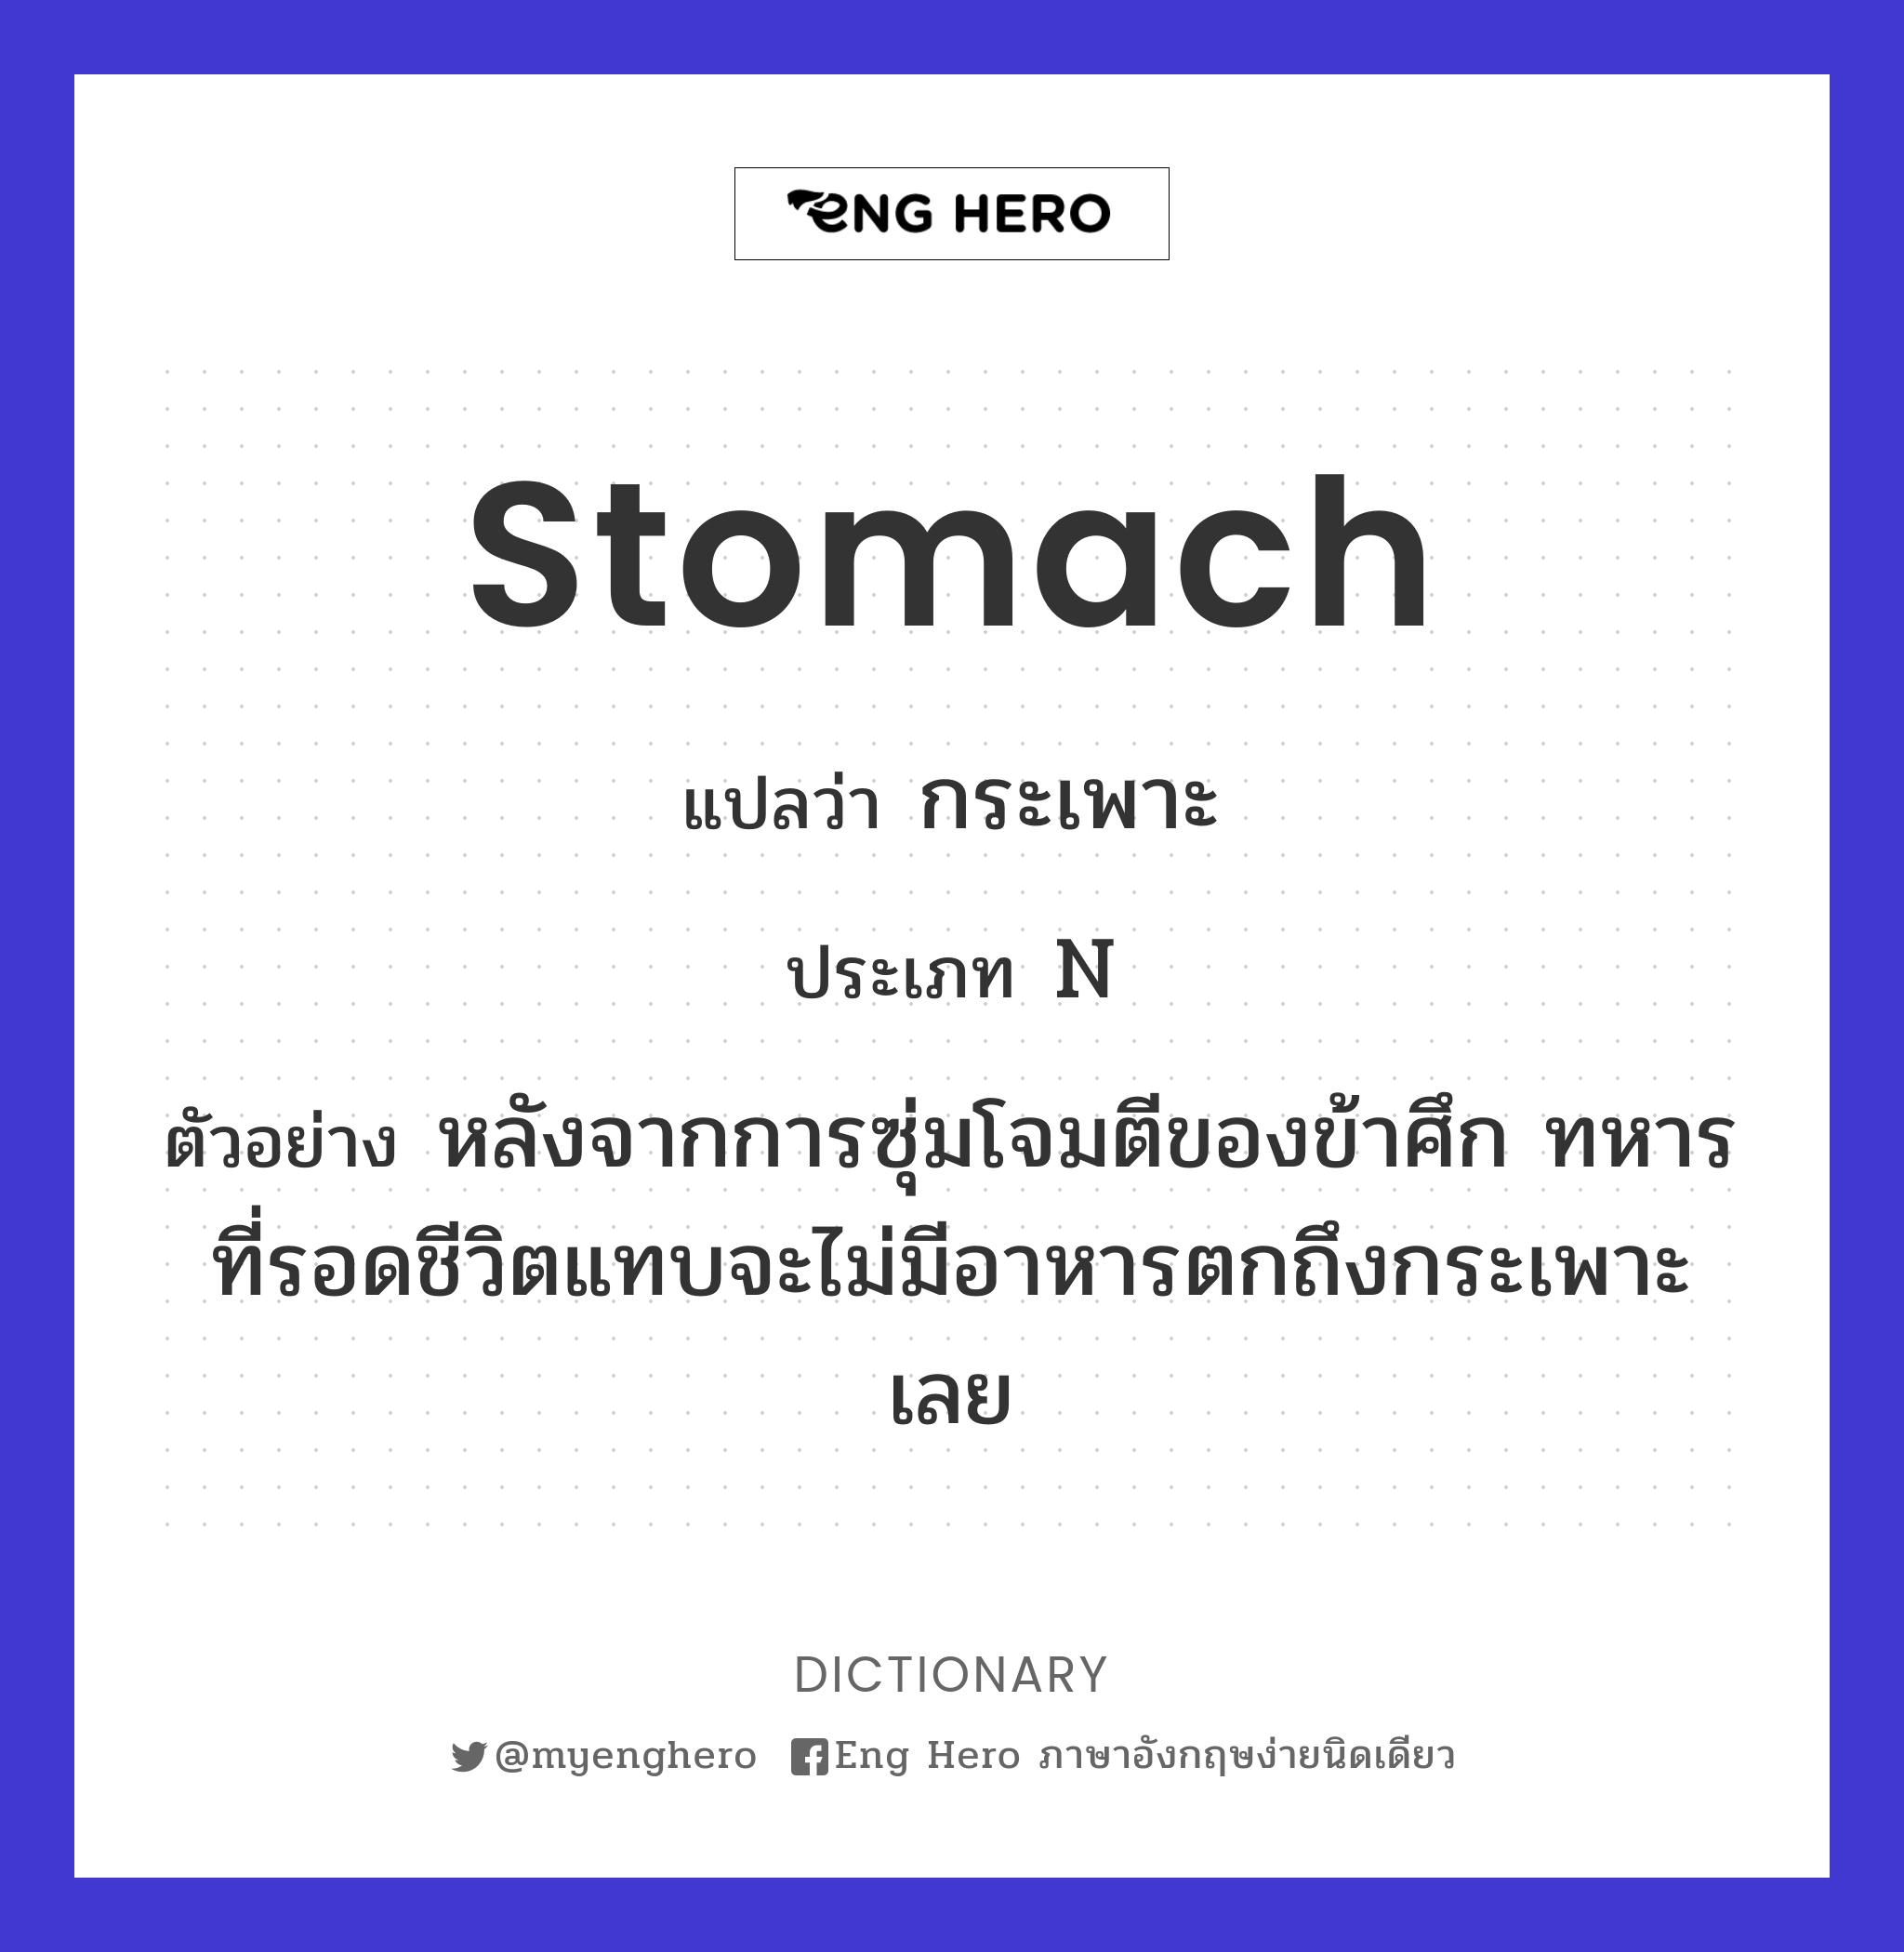 stomach